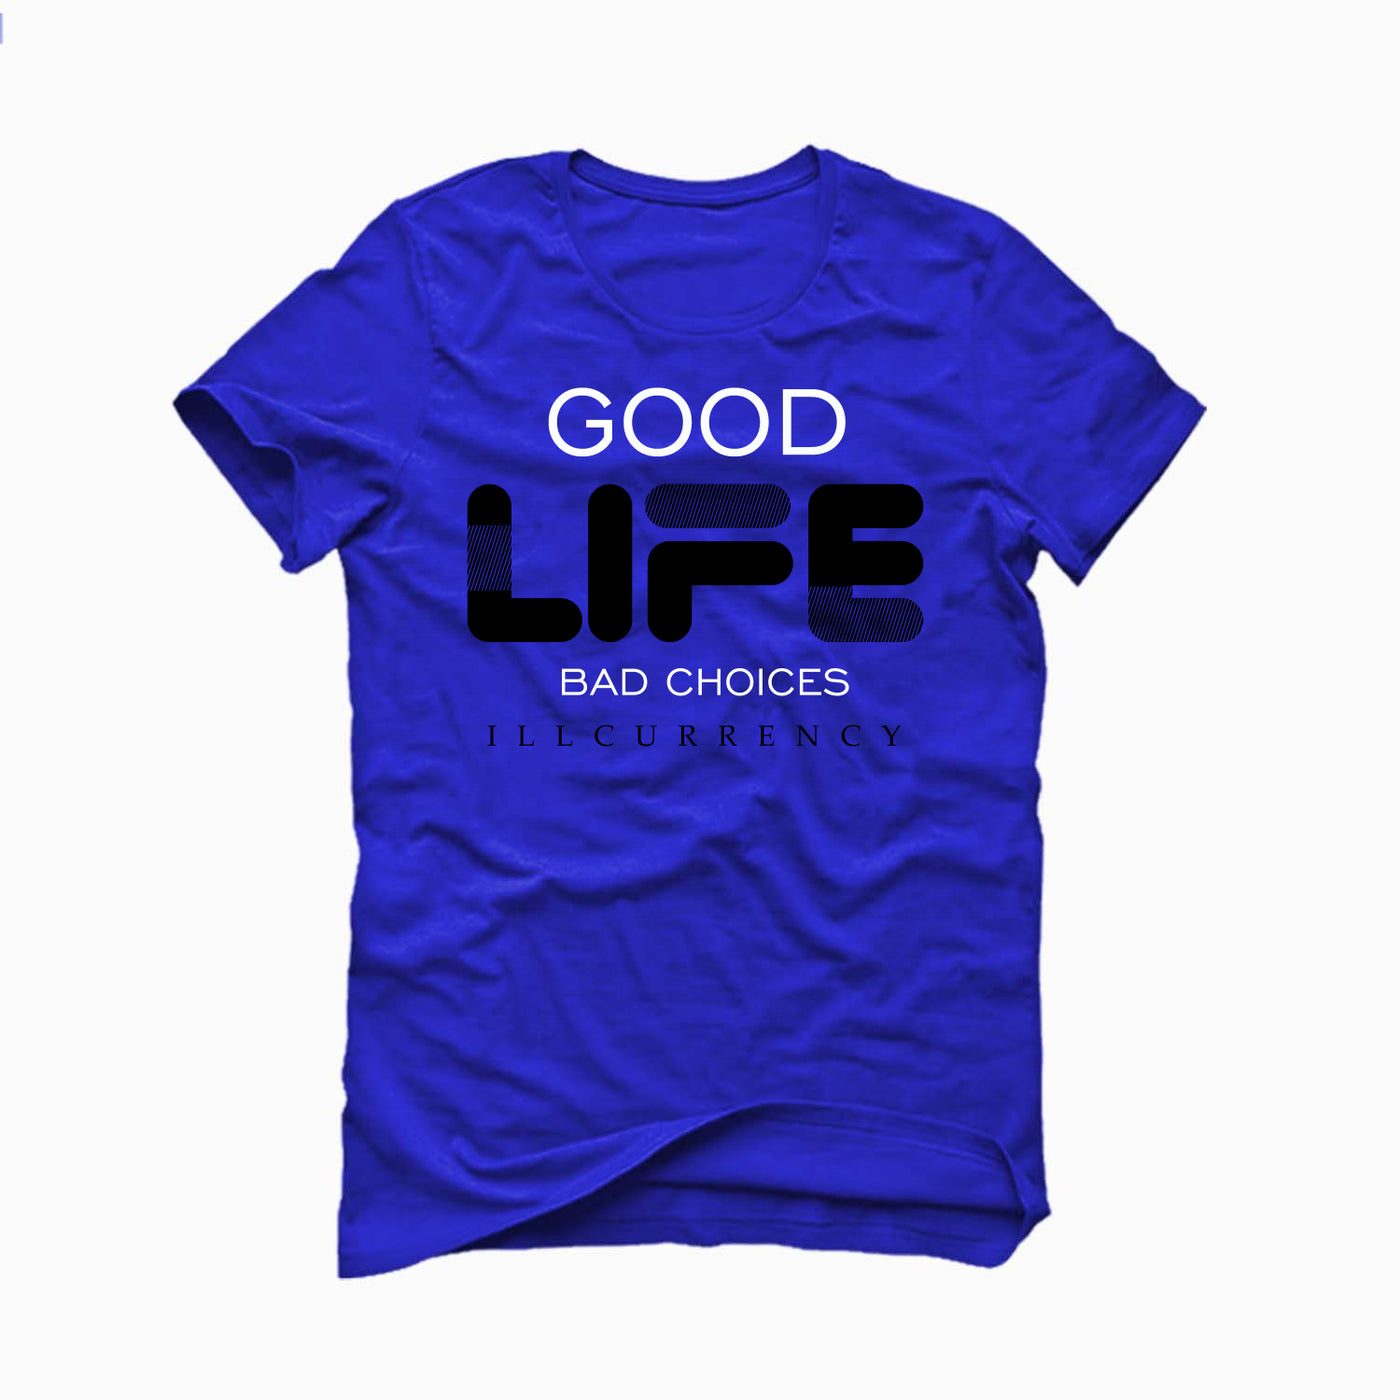 AIR JORDAN 2 LOW “VARSITY ROYAL” Royal Blue T-Shirt (Bad Choices)